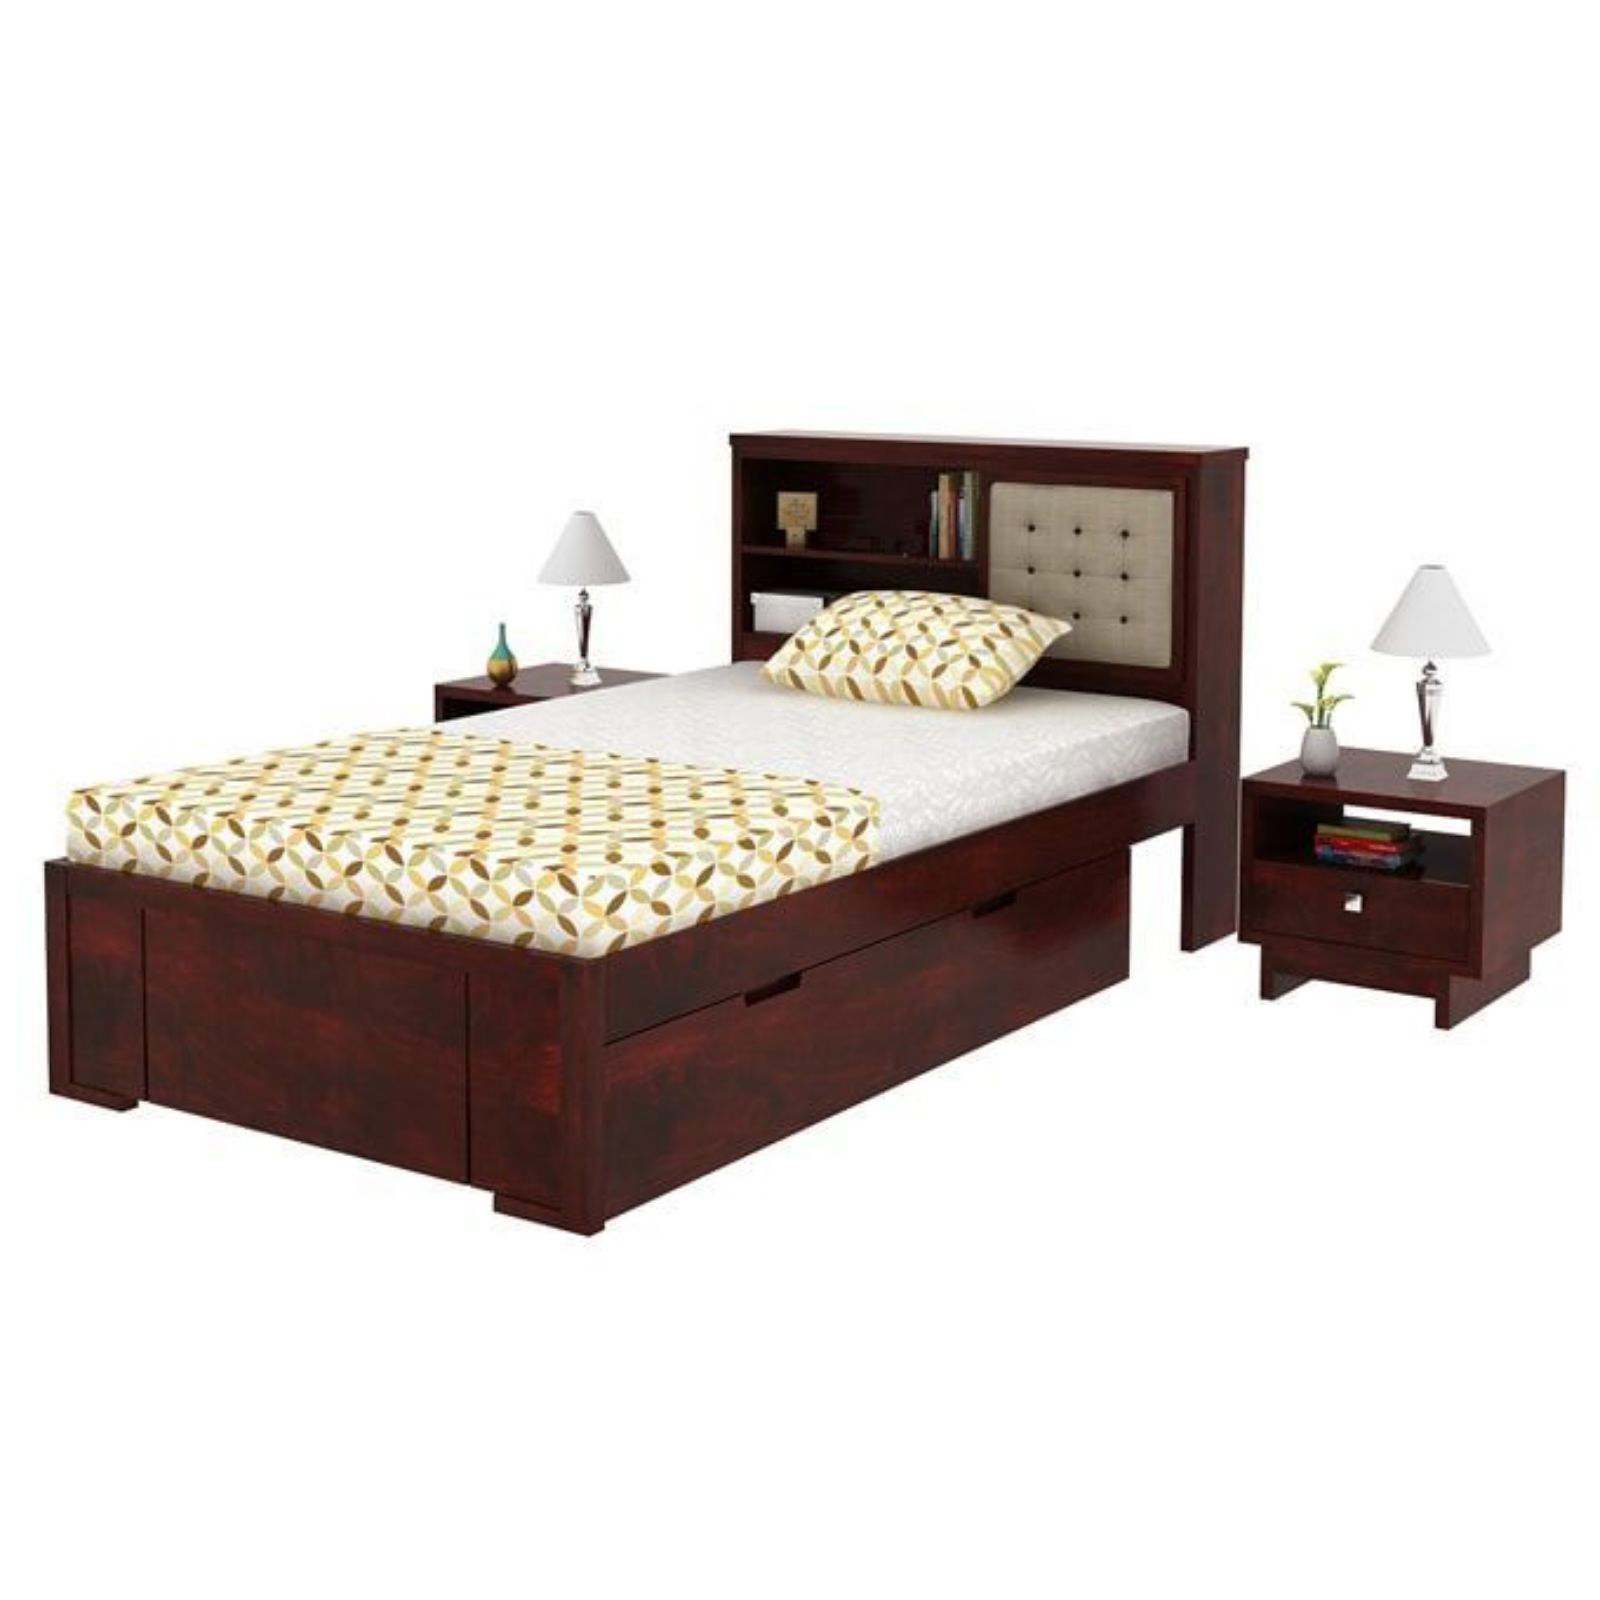 Luni Single Bed With Storage box headboard